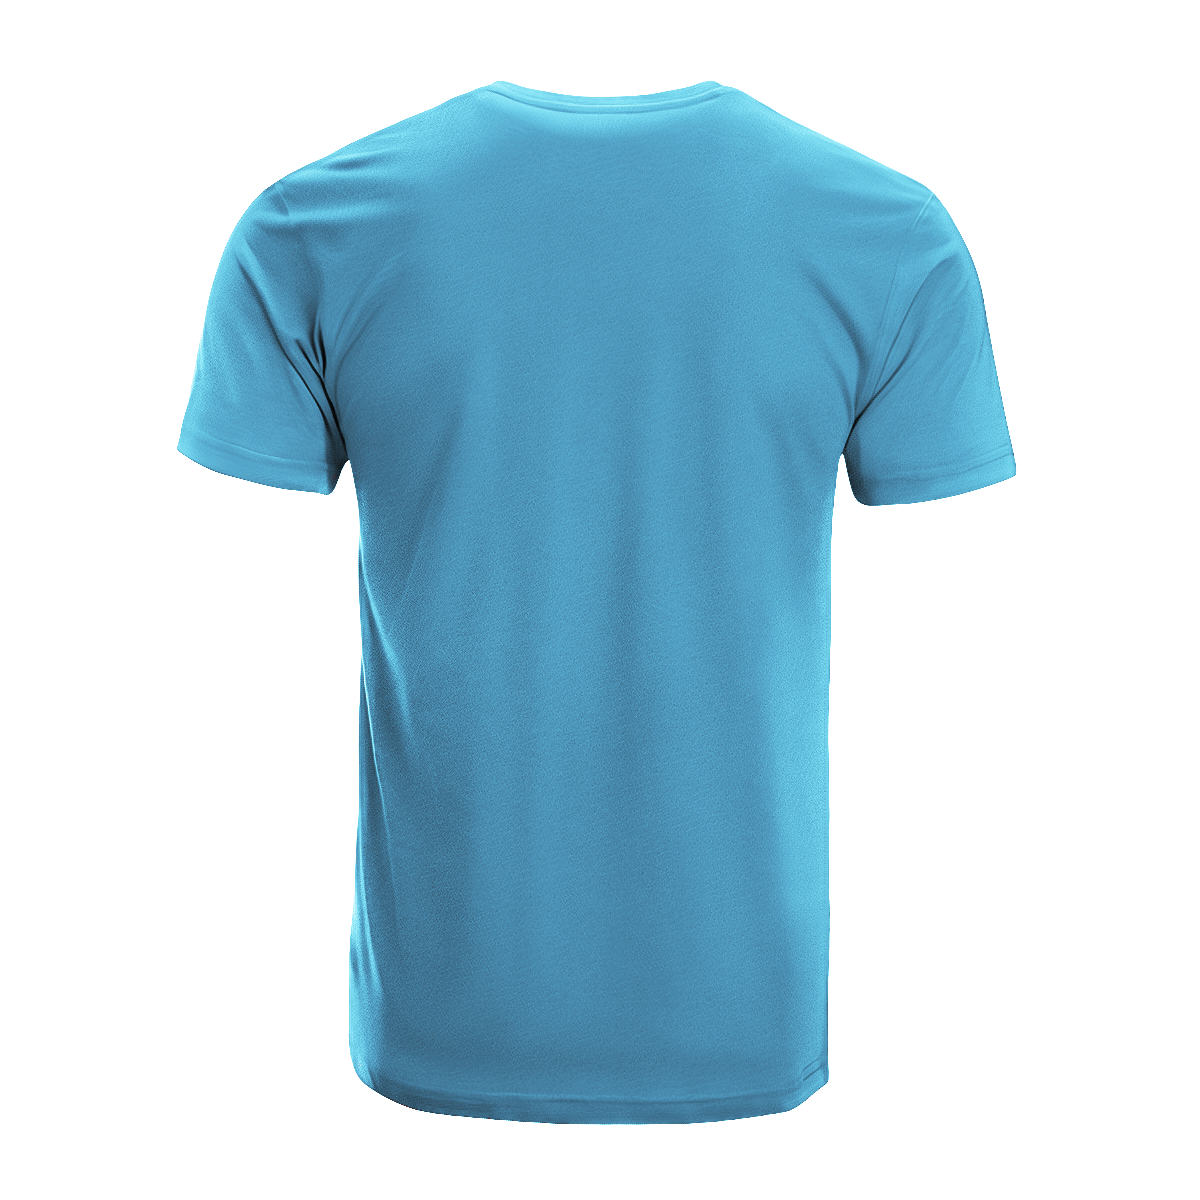 Maxtone Tartan Crest T-shirt - I'm not yelling style